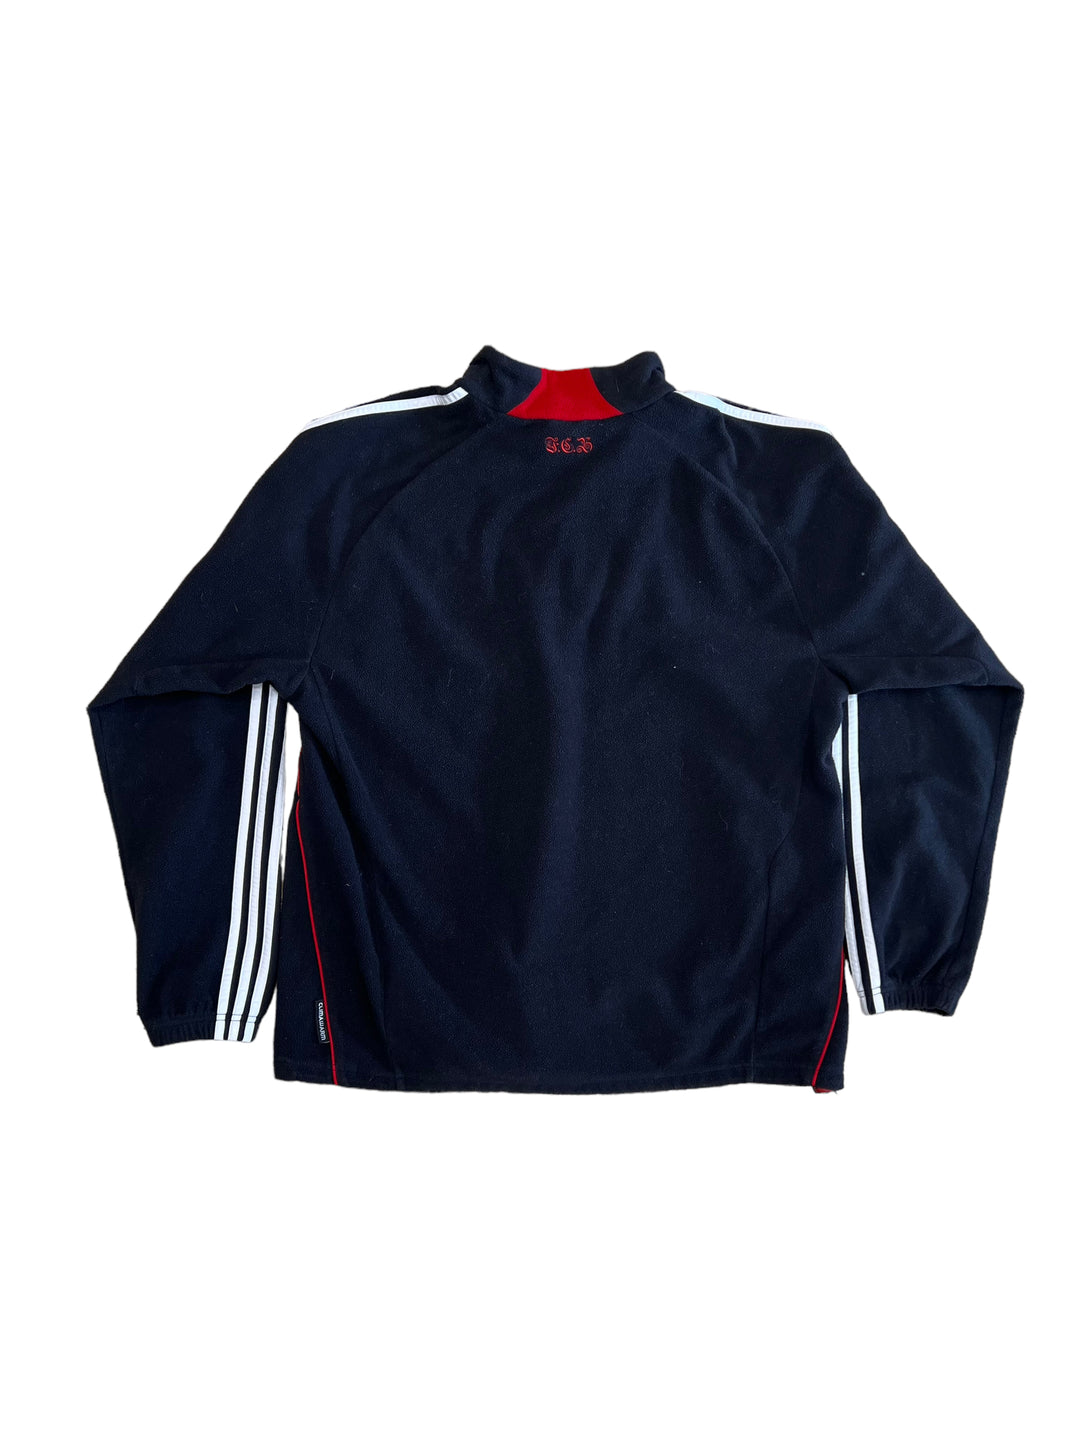 Adidas FC Bayern Munchen Fleece Jacket Men’s Extra Large